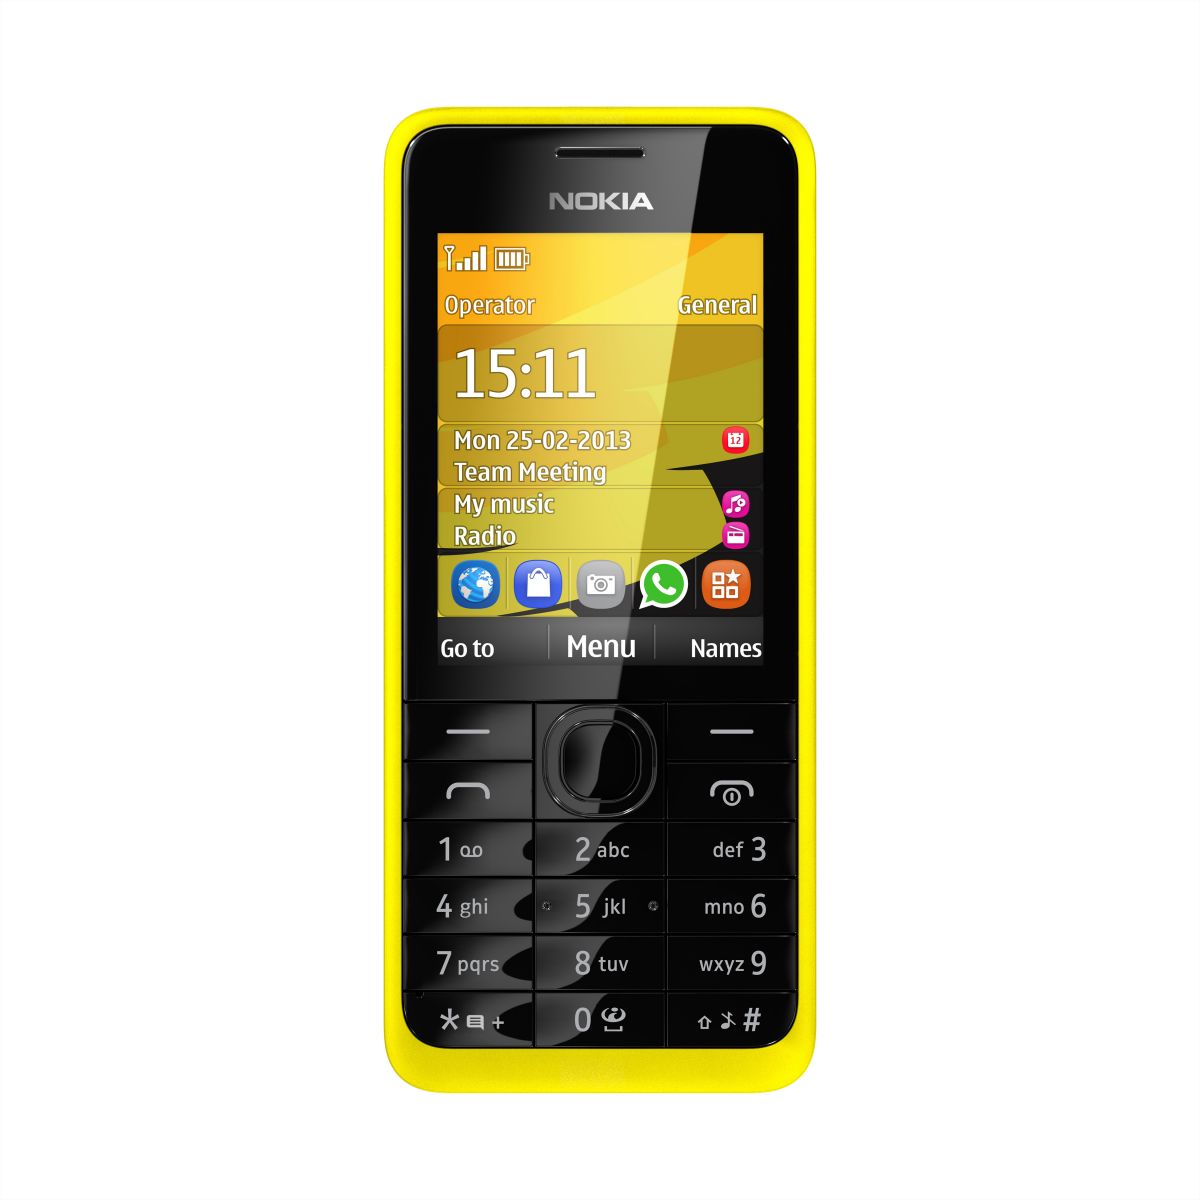 Nokia 201 Pictures